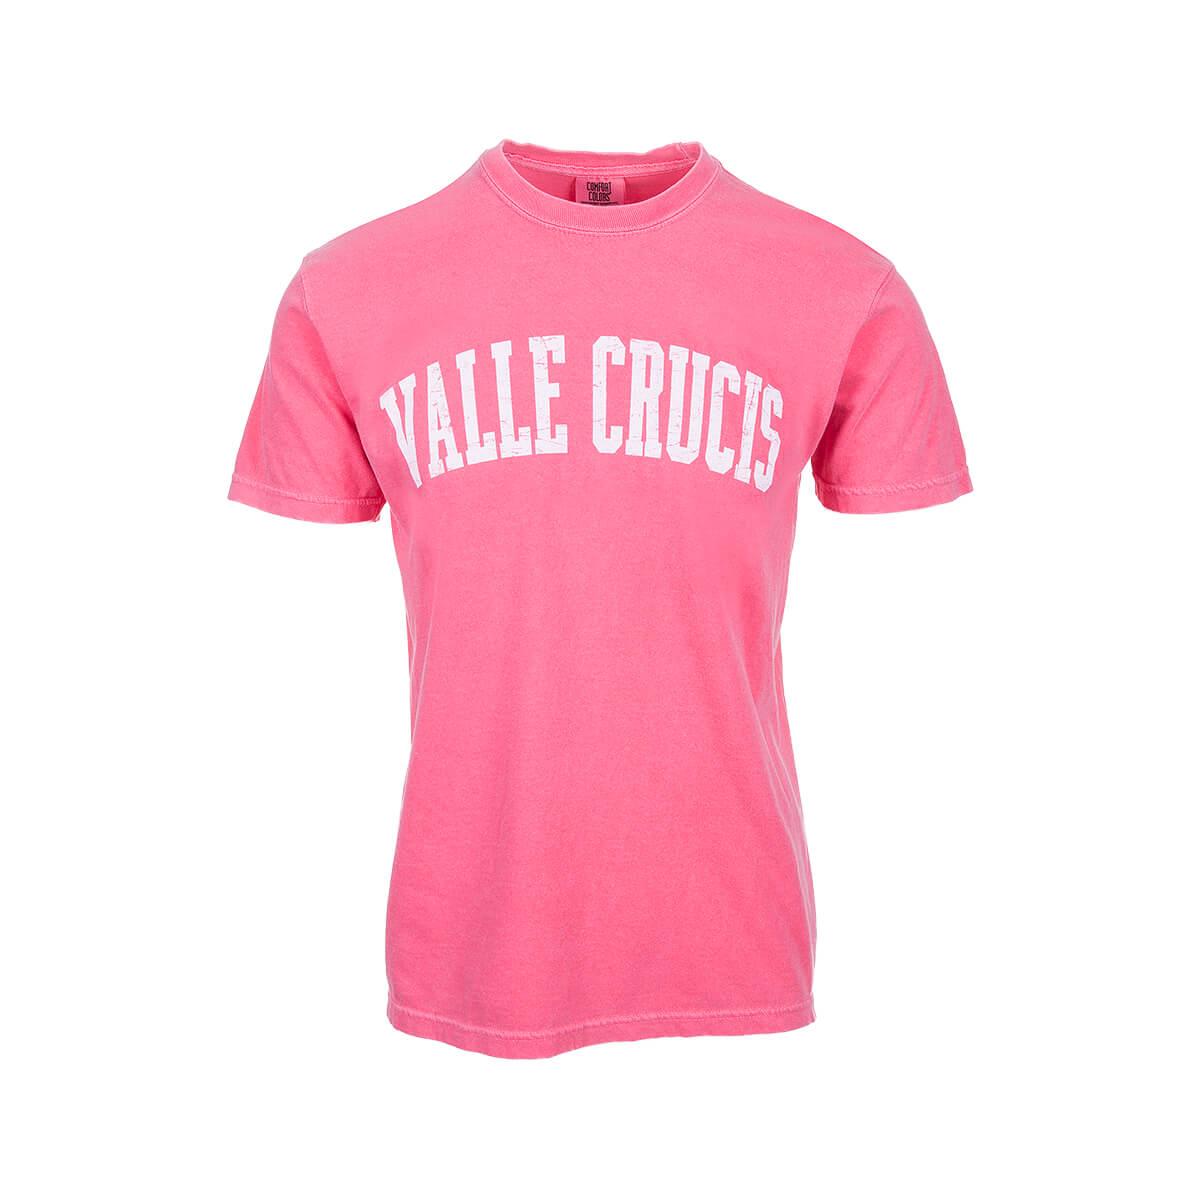  Mast General Store Valle Crucis Short Sleeve T- Shirt